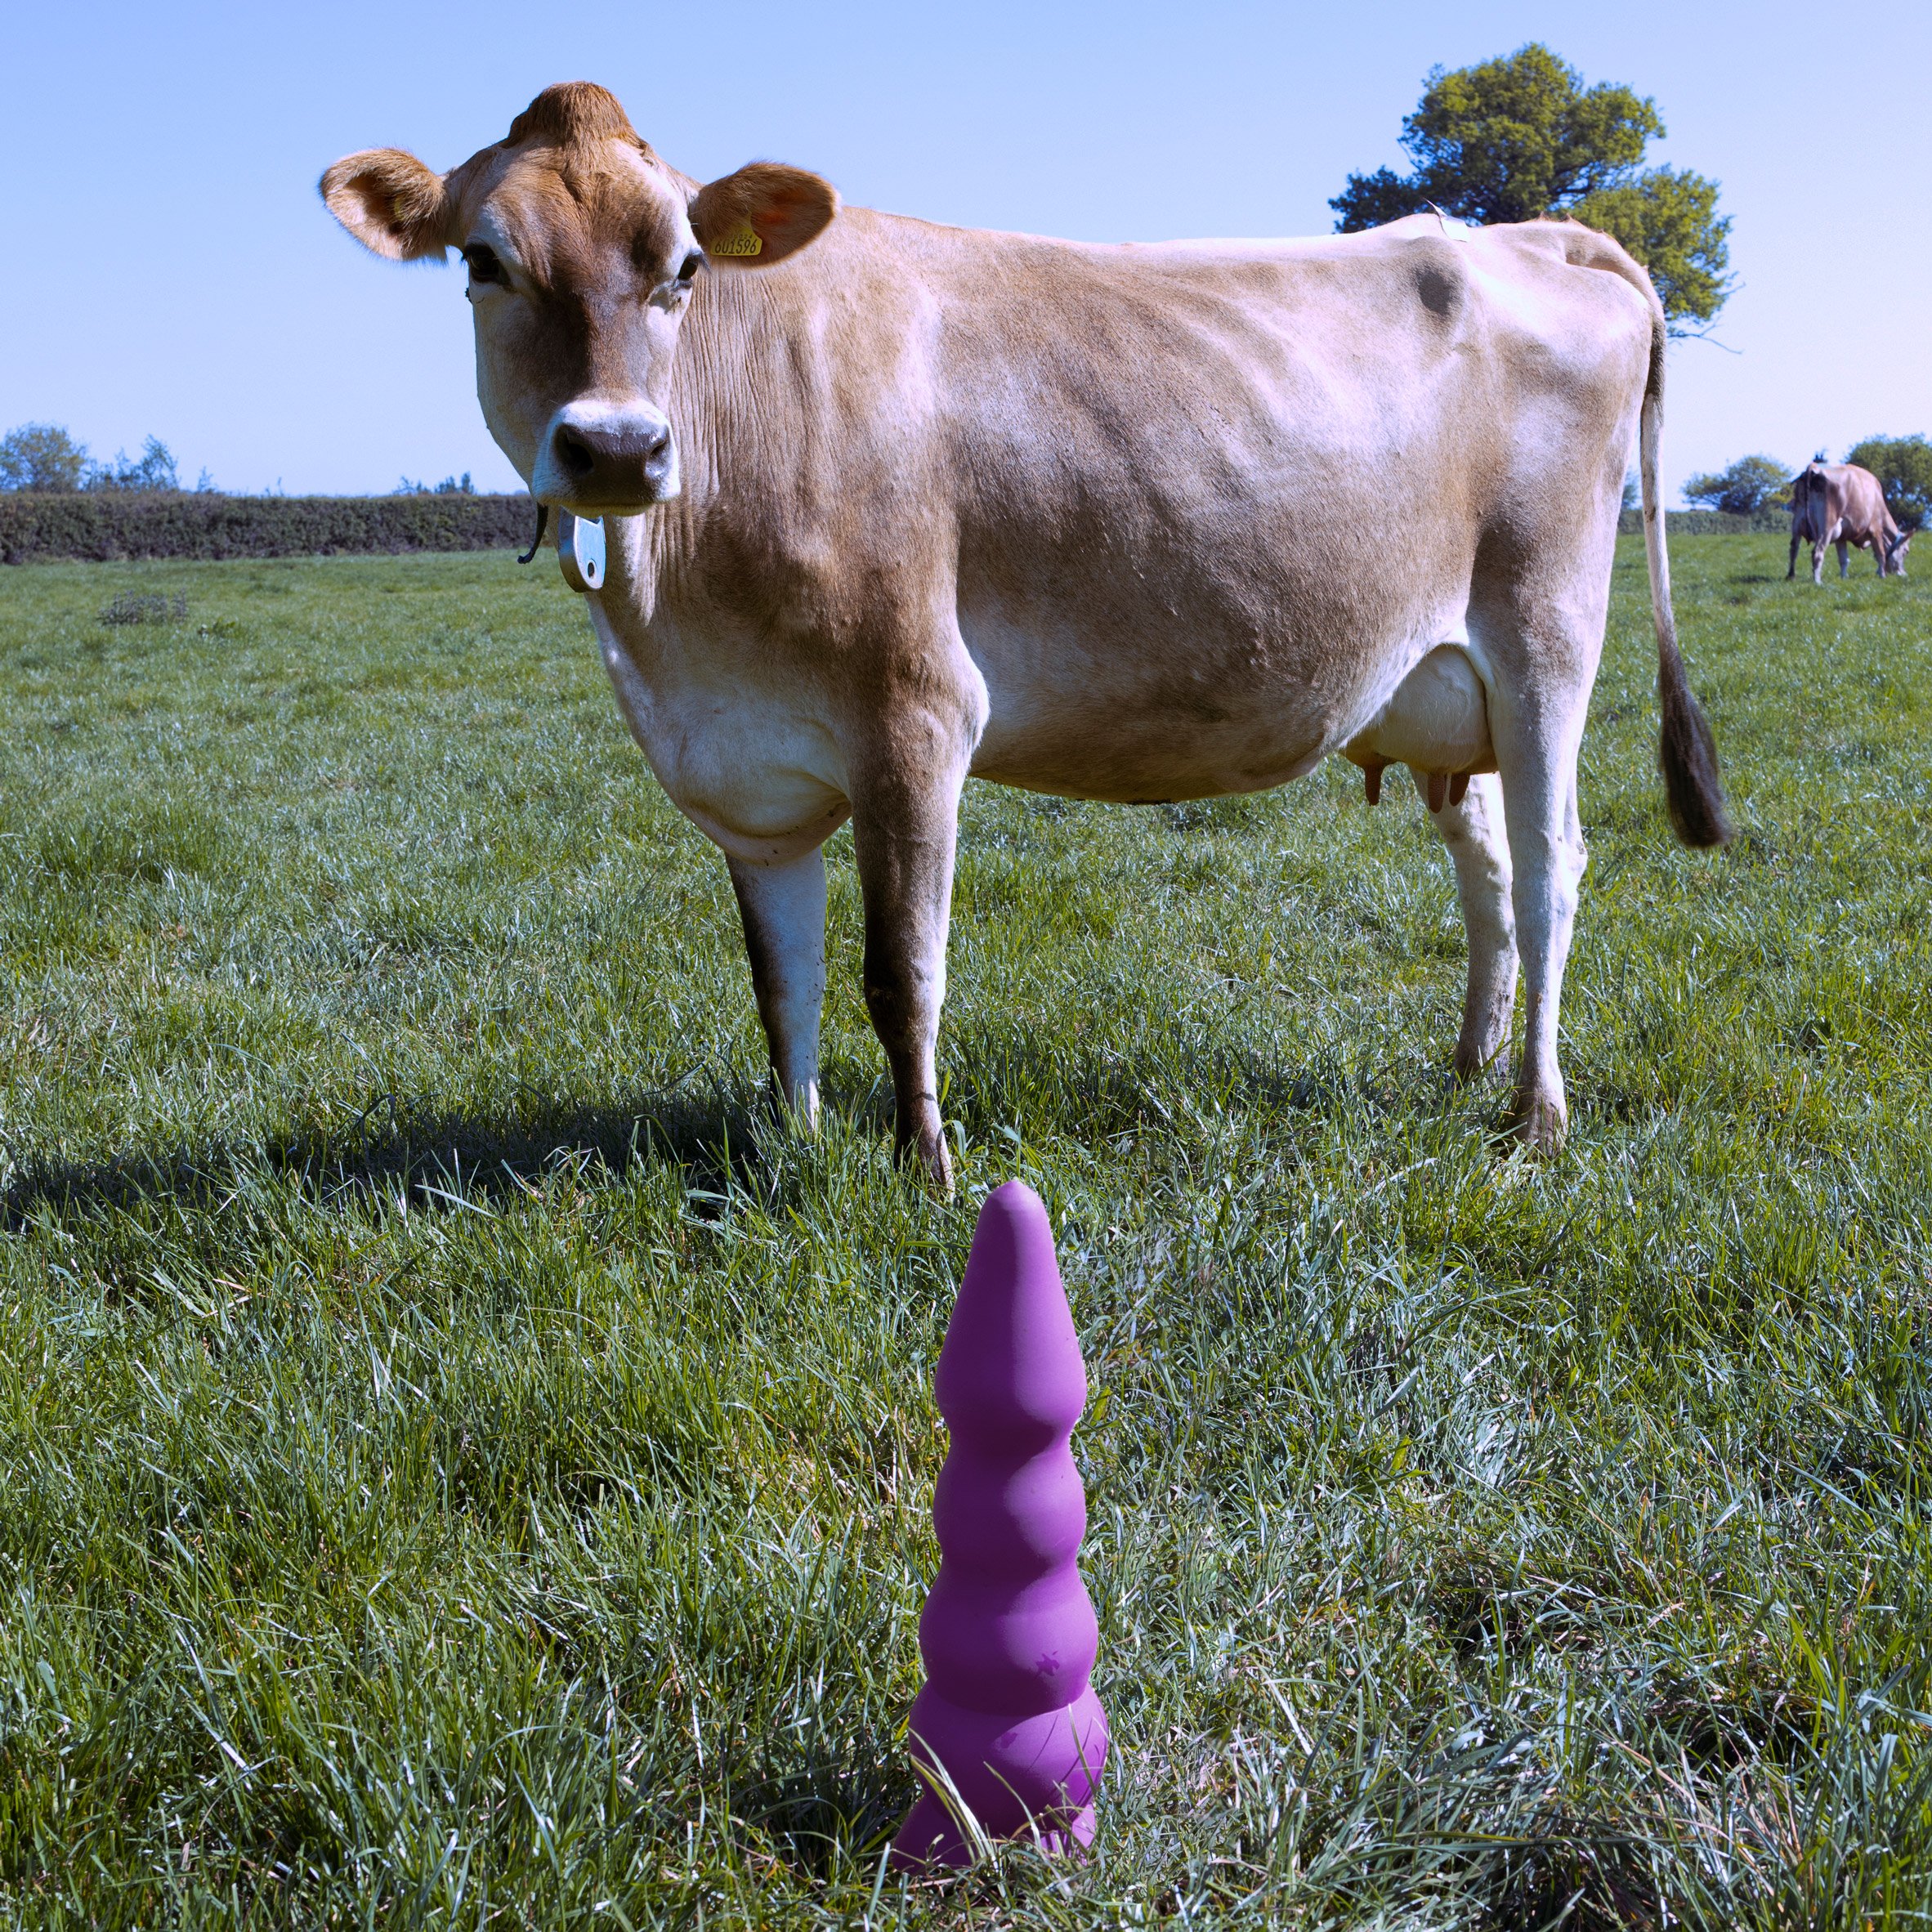 Ece Tan designs sex toys for cows to make farming practices more pleasurable pic